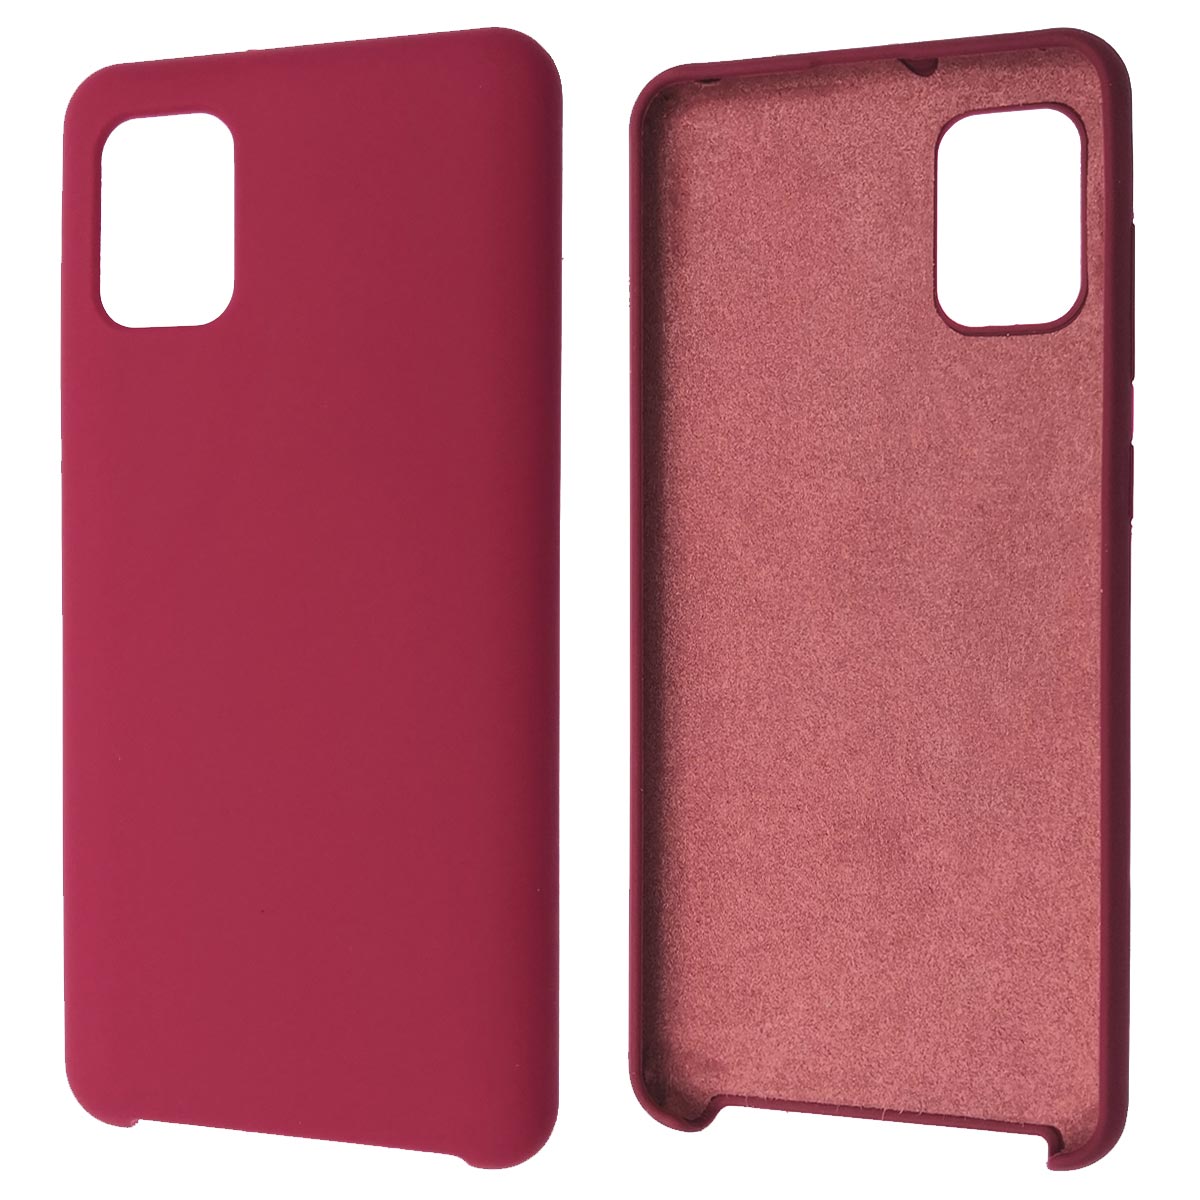 Чехол накладка Silicon Cover для SAMSUNG Galaxy A31 (SM-A315), силикон, бархат, цвет вишневый